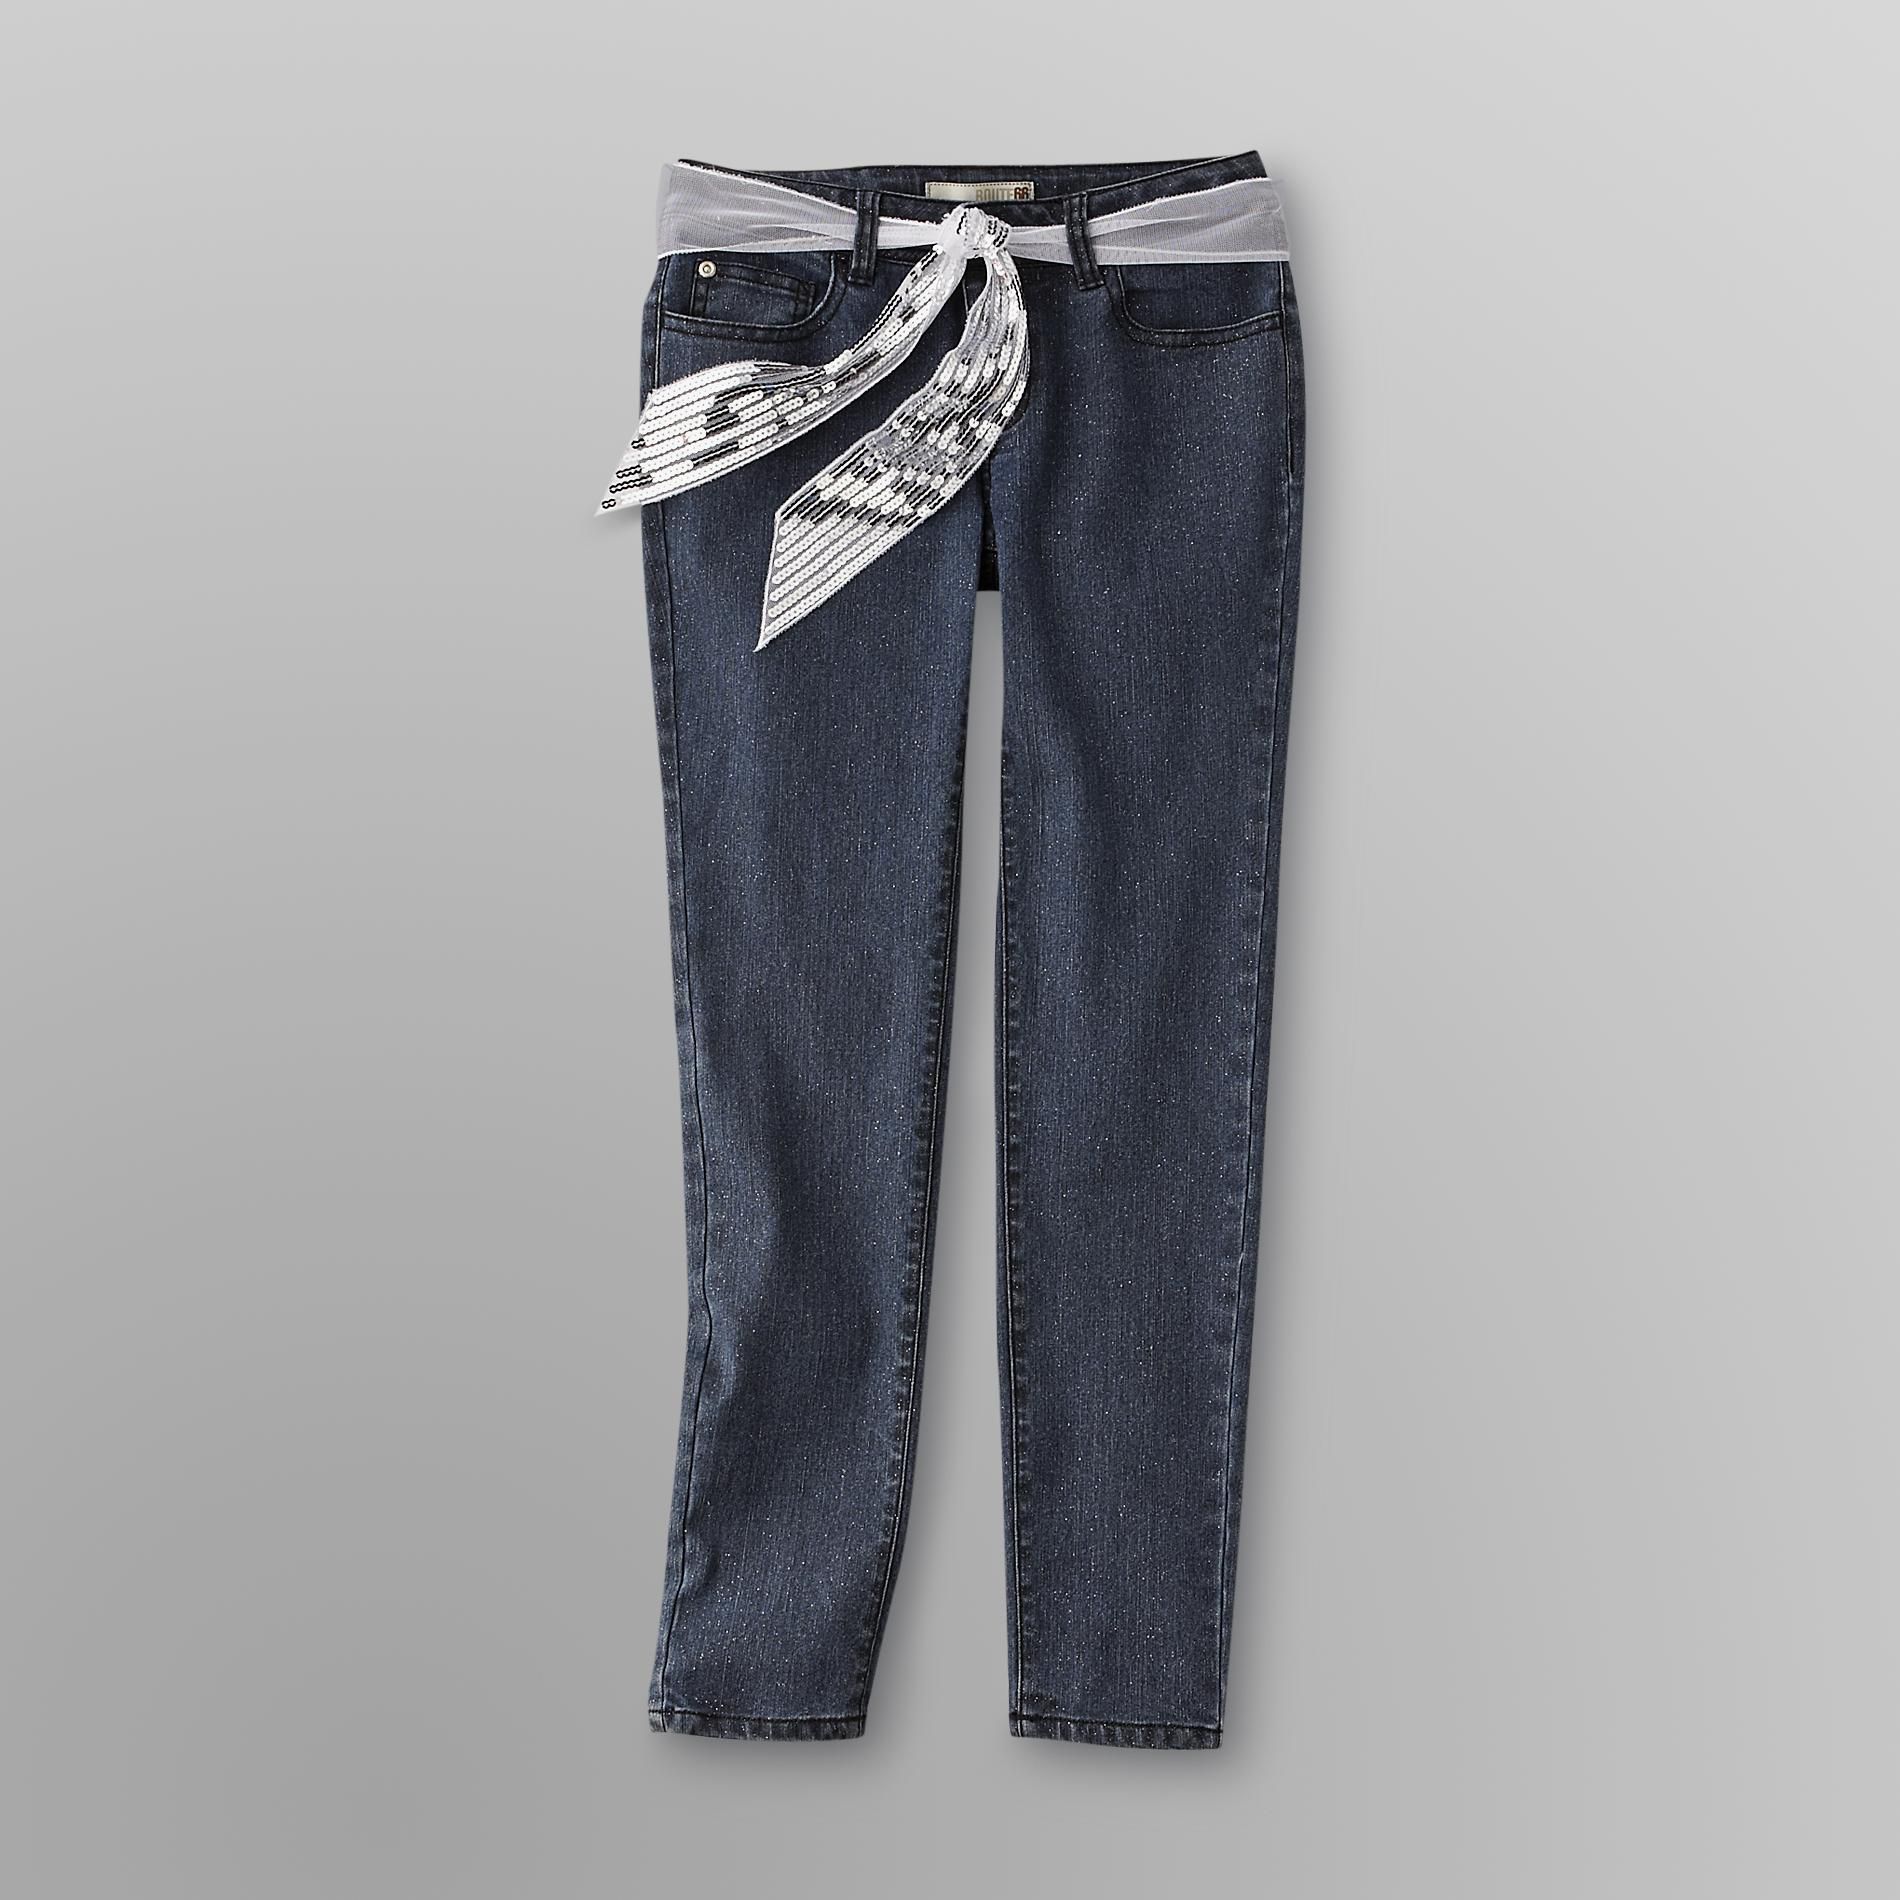 Route 66 Girl's Sash-Belt Jeans